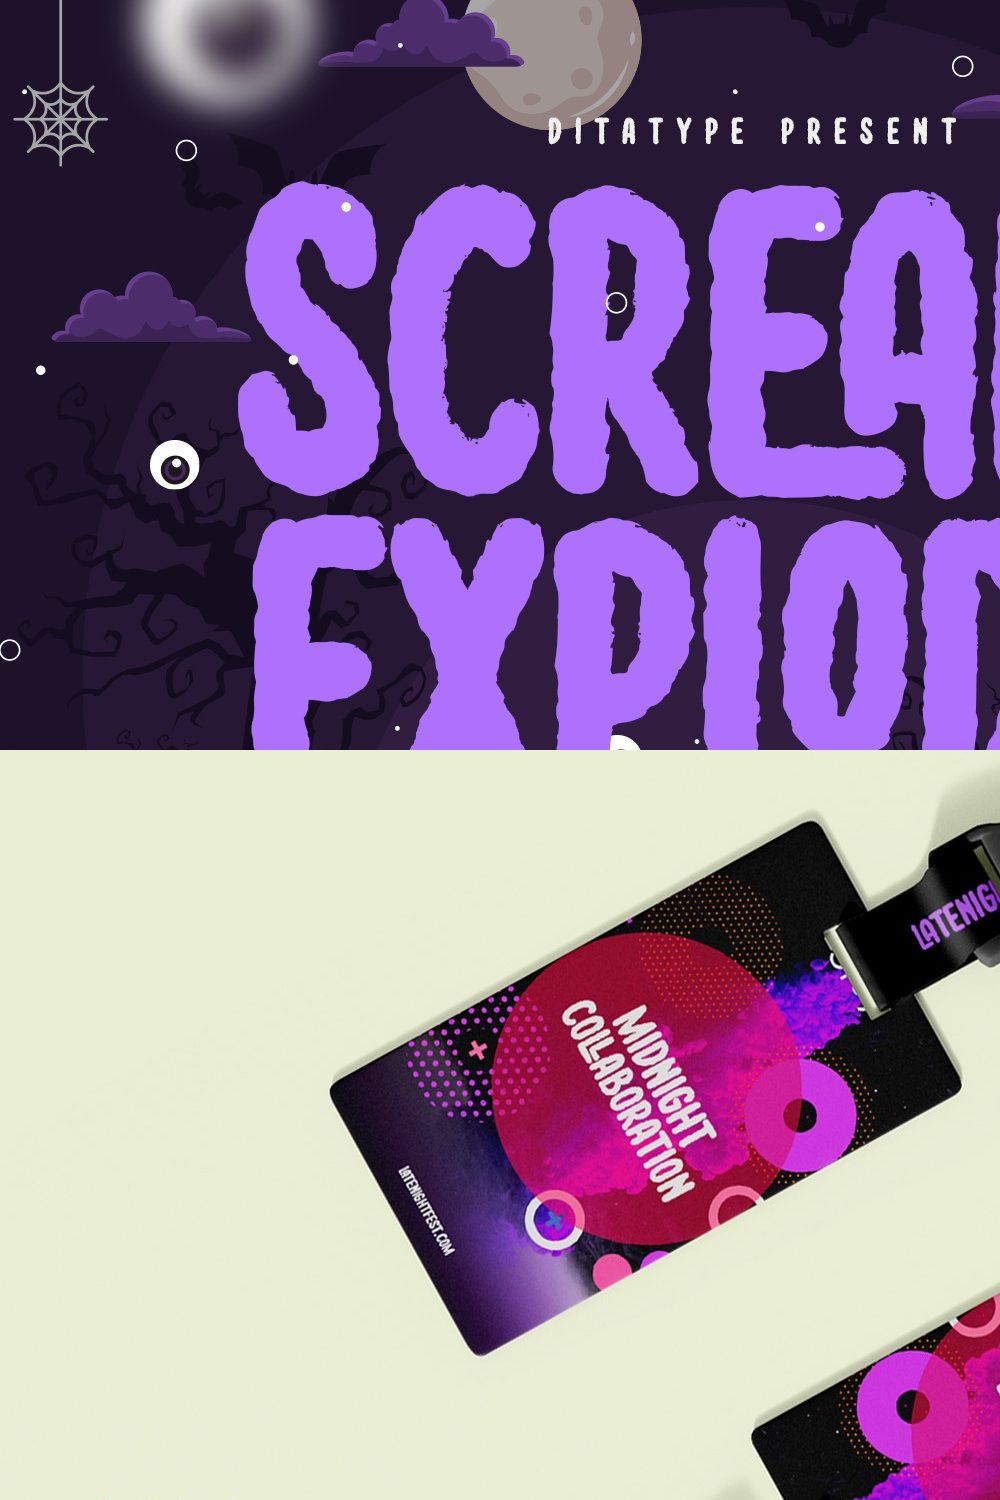 Scream Explode pinterest preview image.